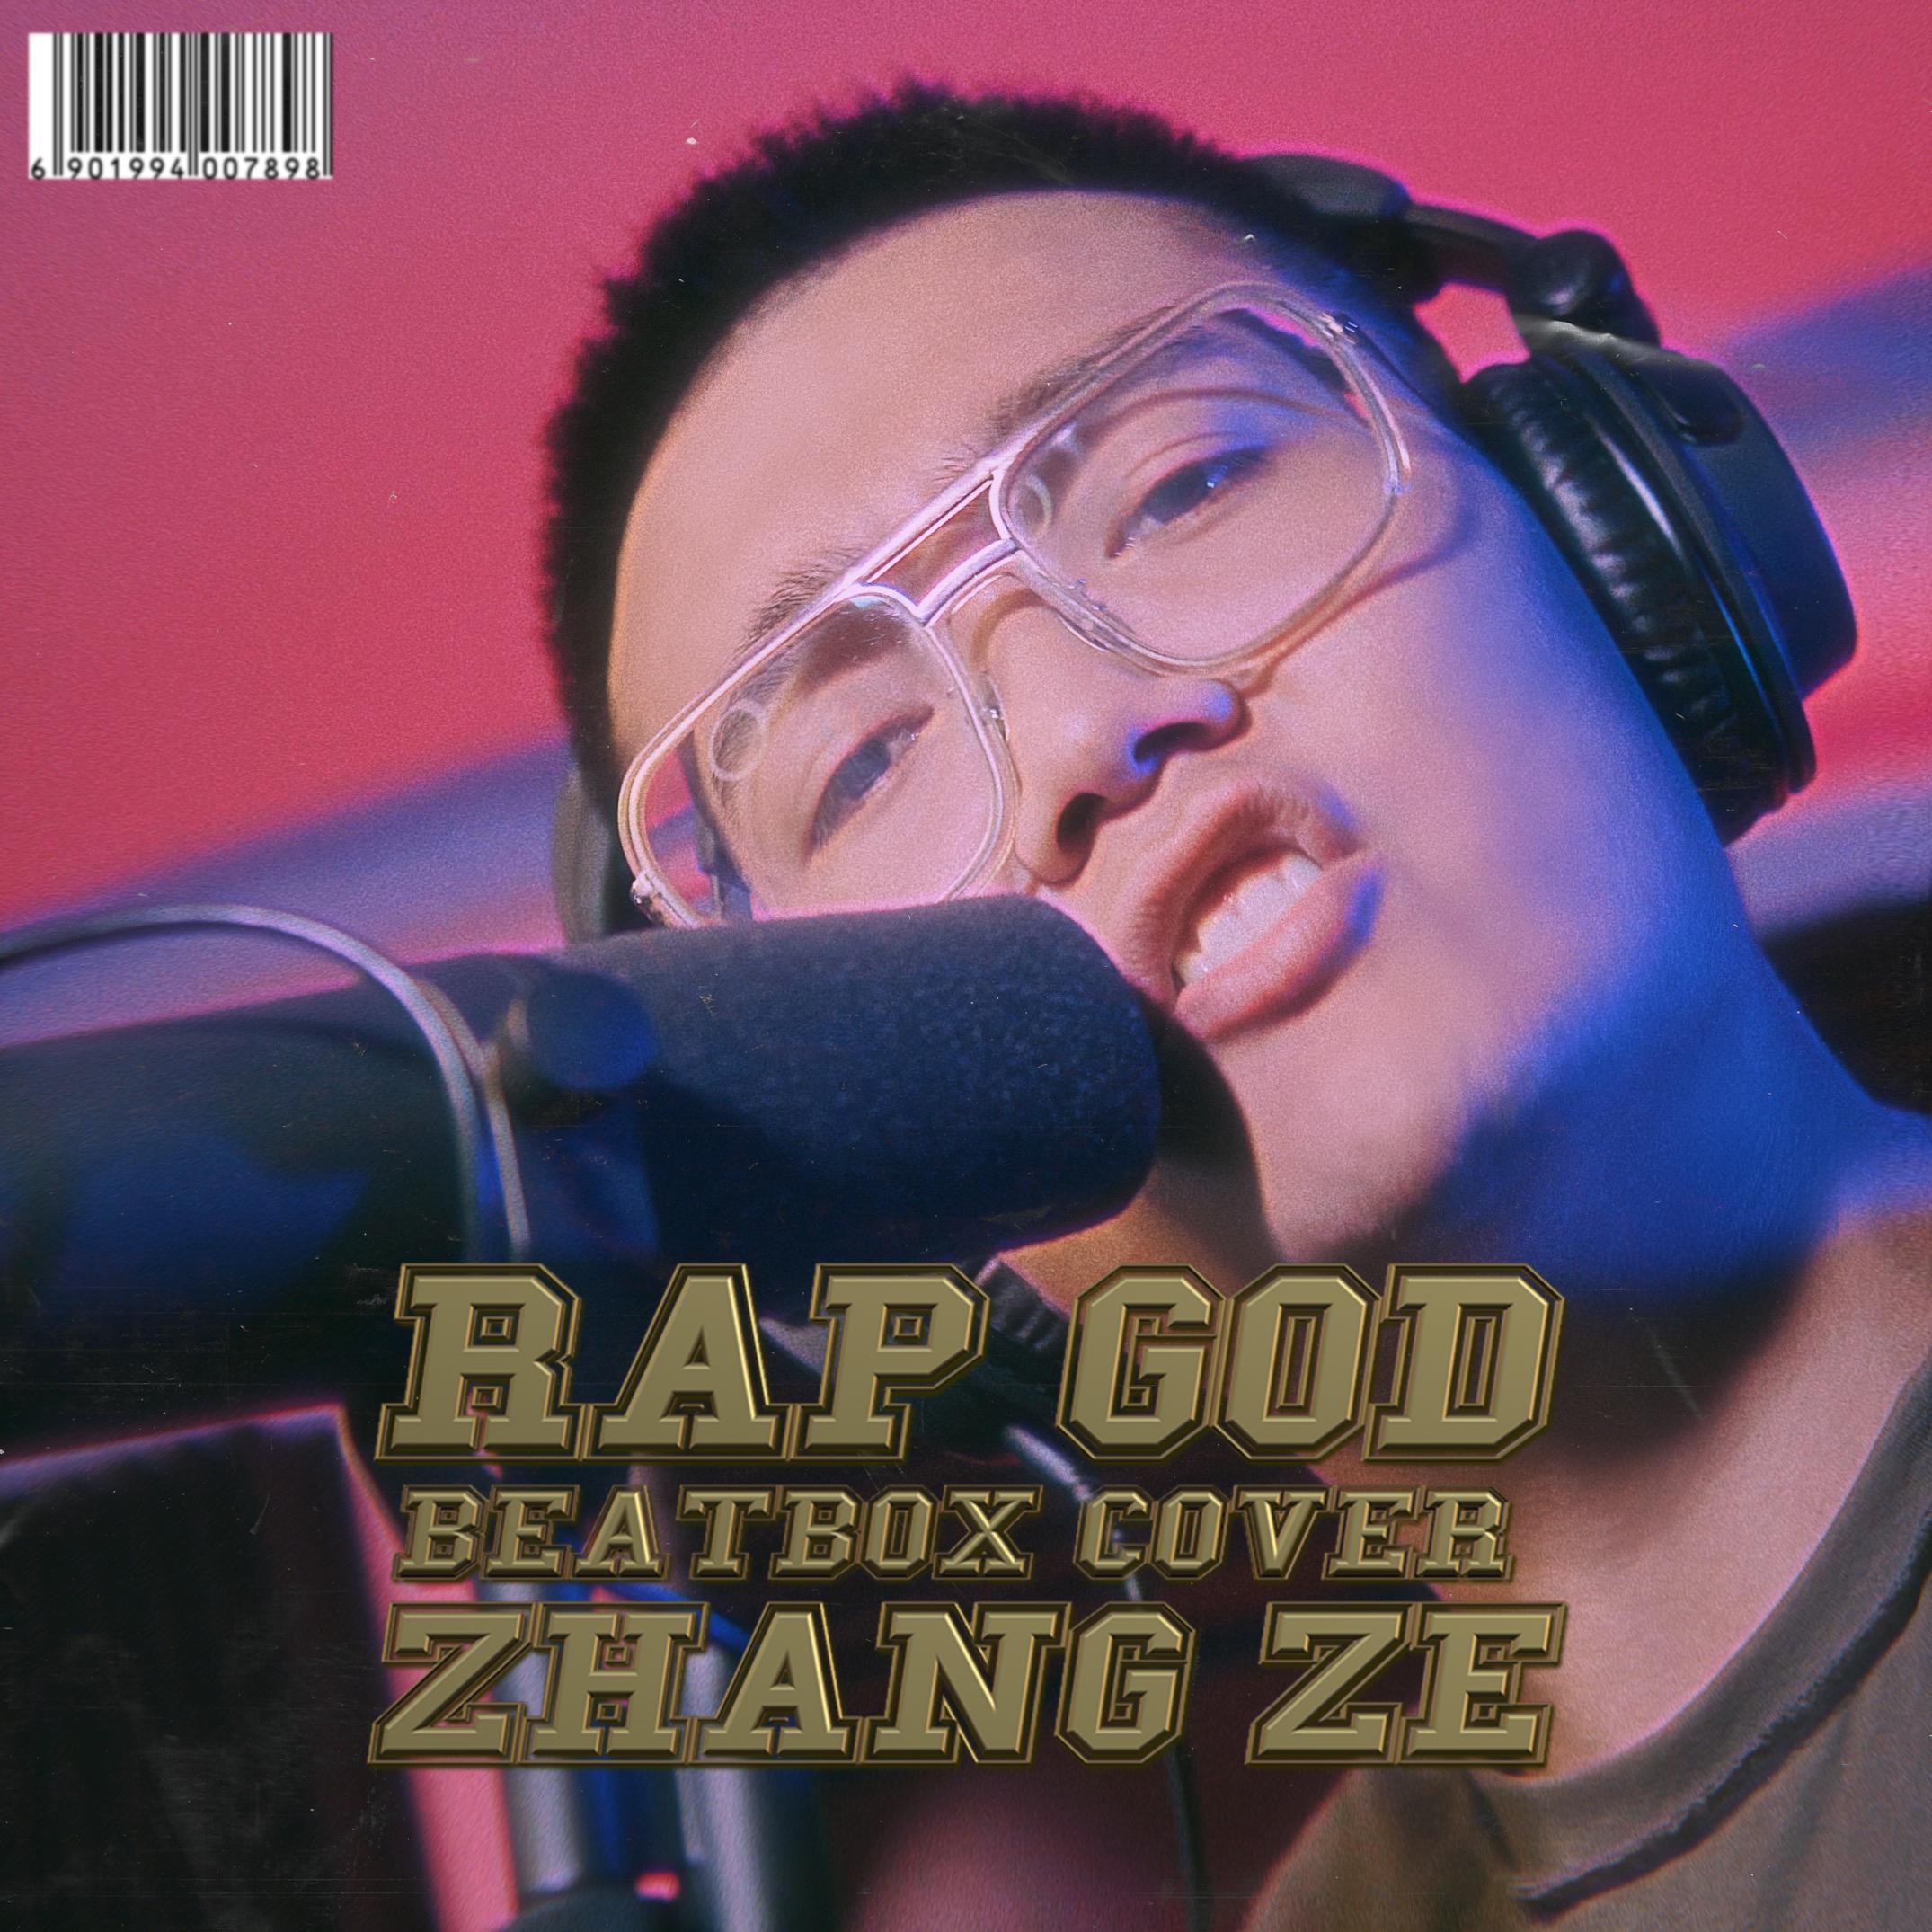 beatbox张泽照片图片